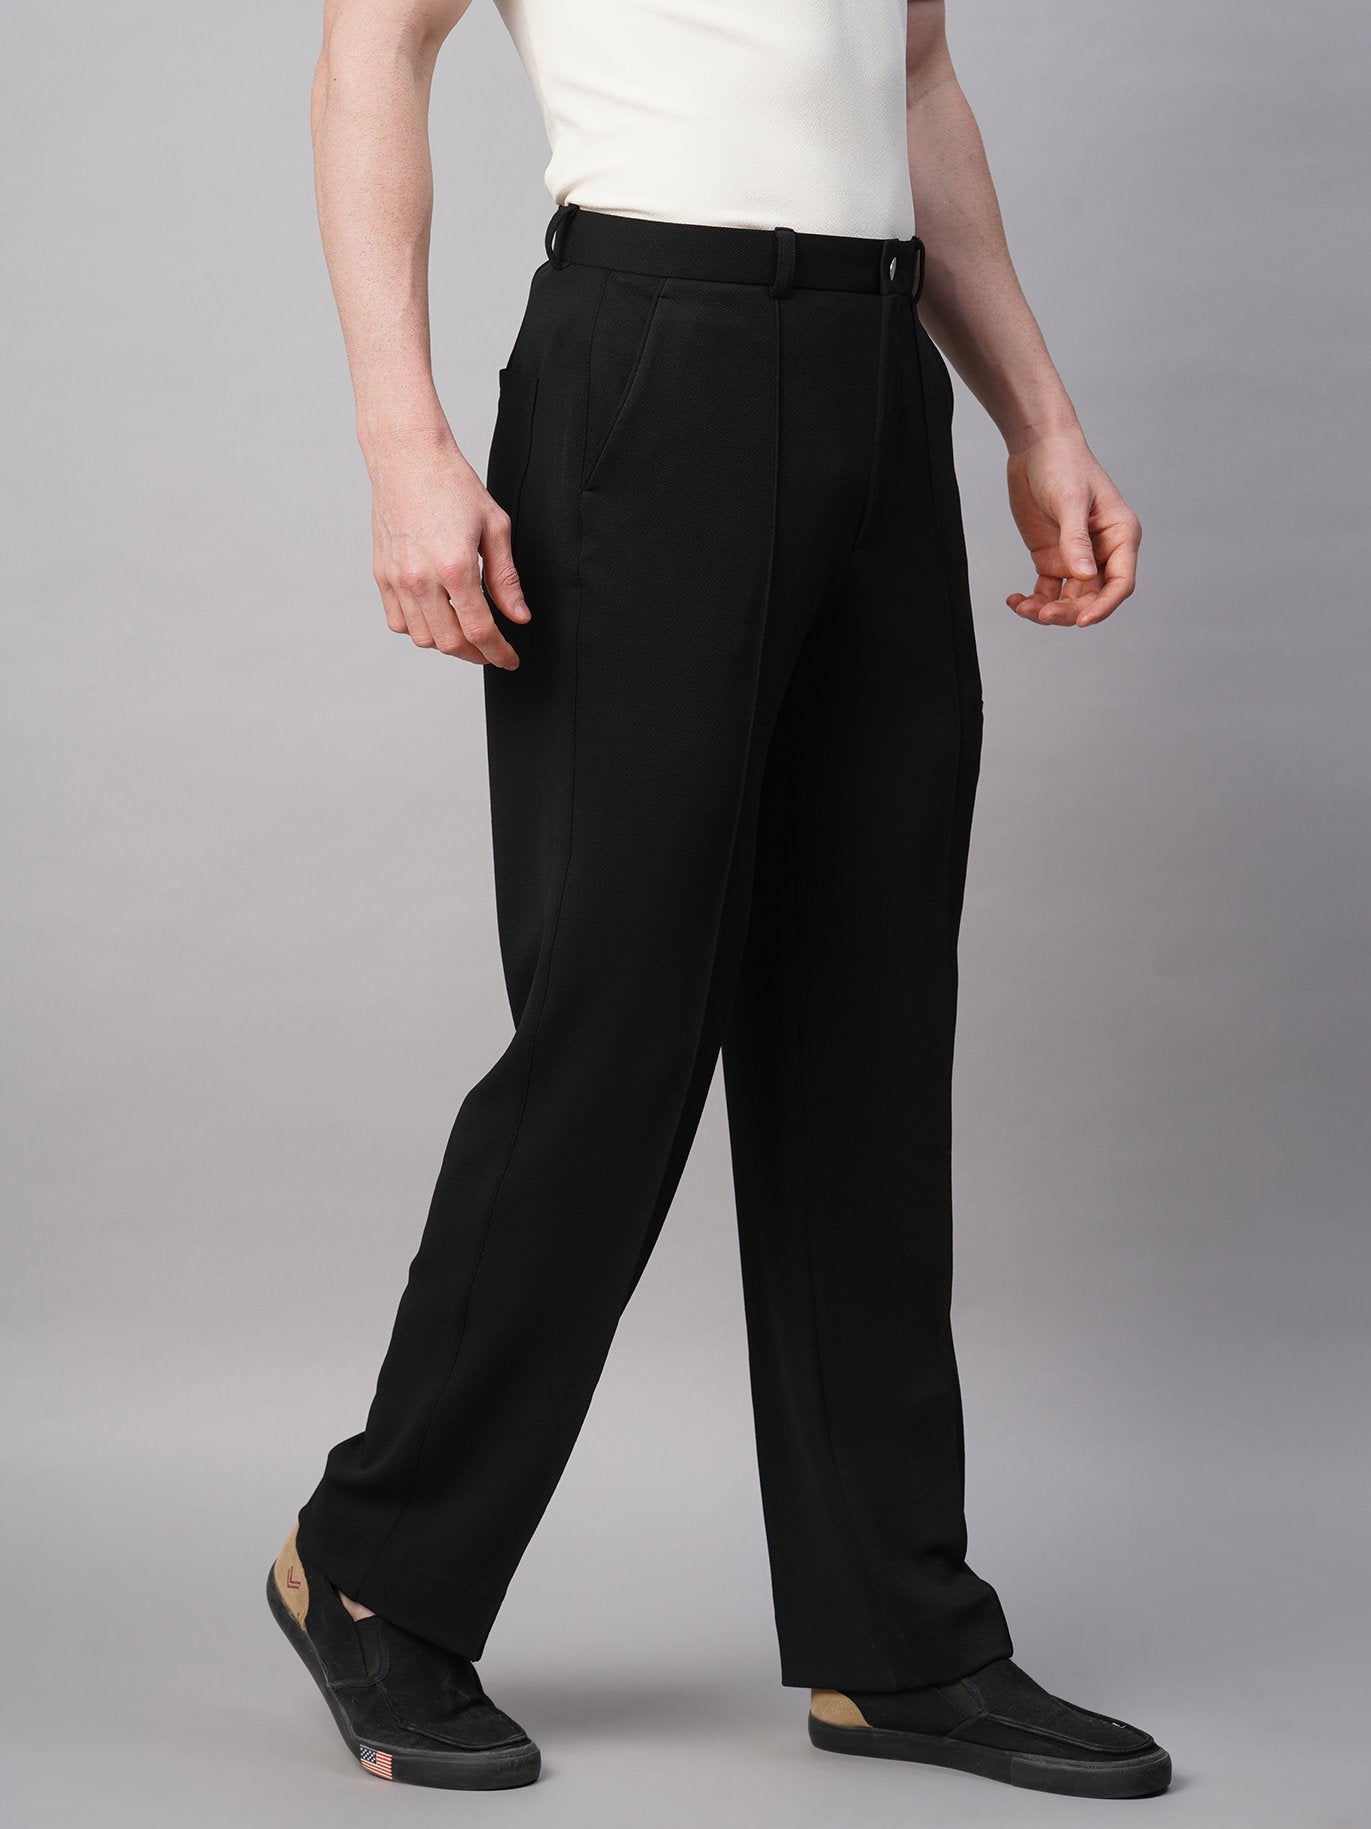 Wave Polo & Fit Bloke Pants Combo - Shirt & Pant